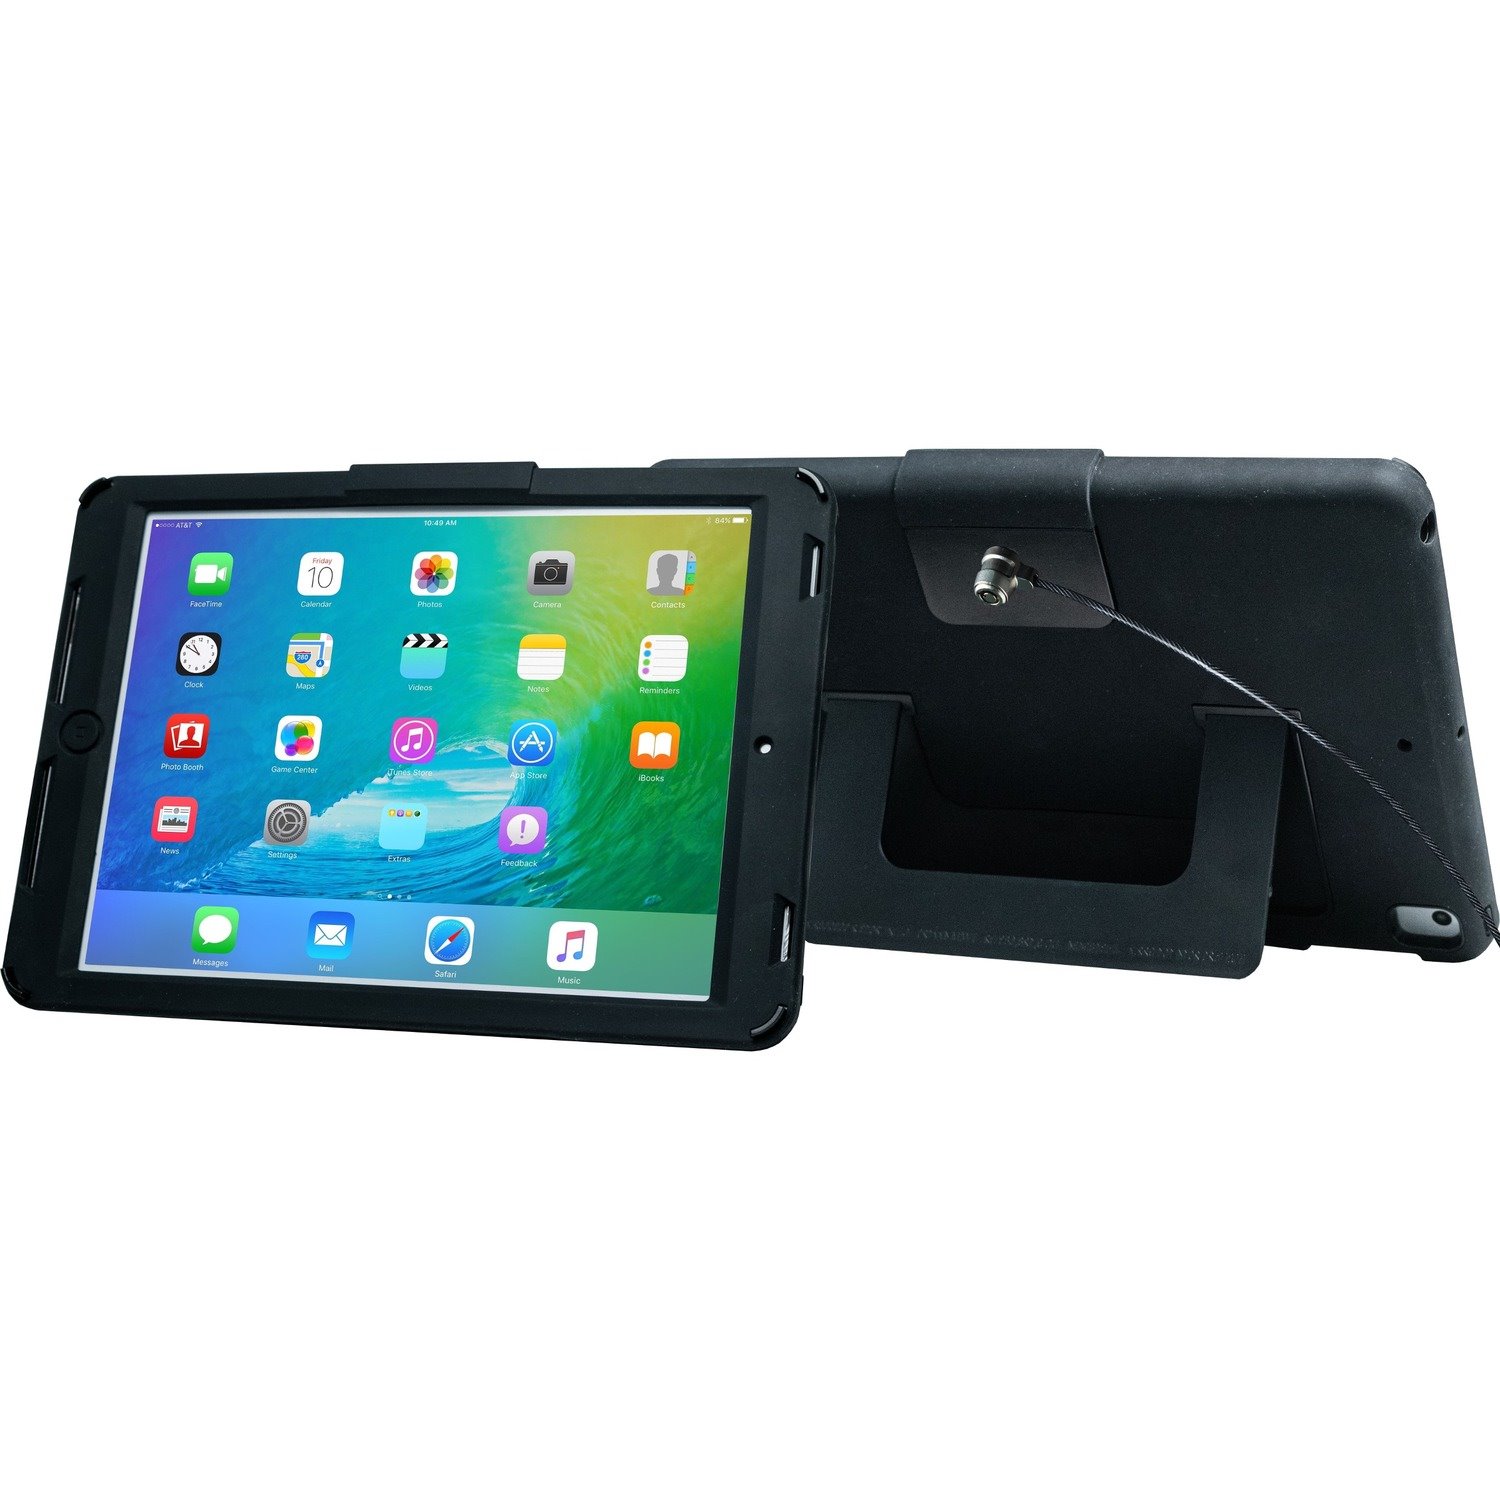 CTA Digital Security Case with Kickstand for iPad Pro 9.7, iPad (Gen. 5-6), and iPad Air (Gen. 1-2)